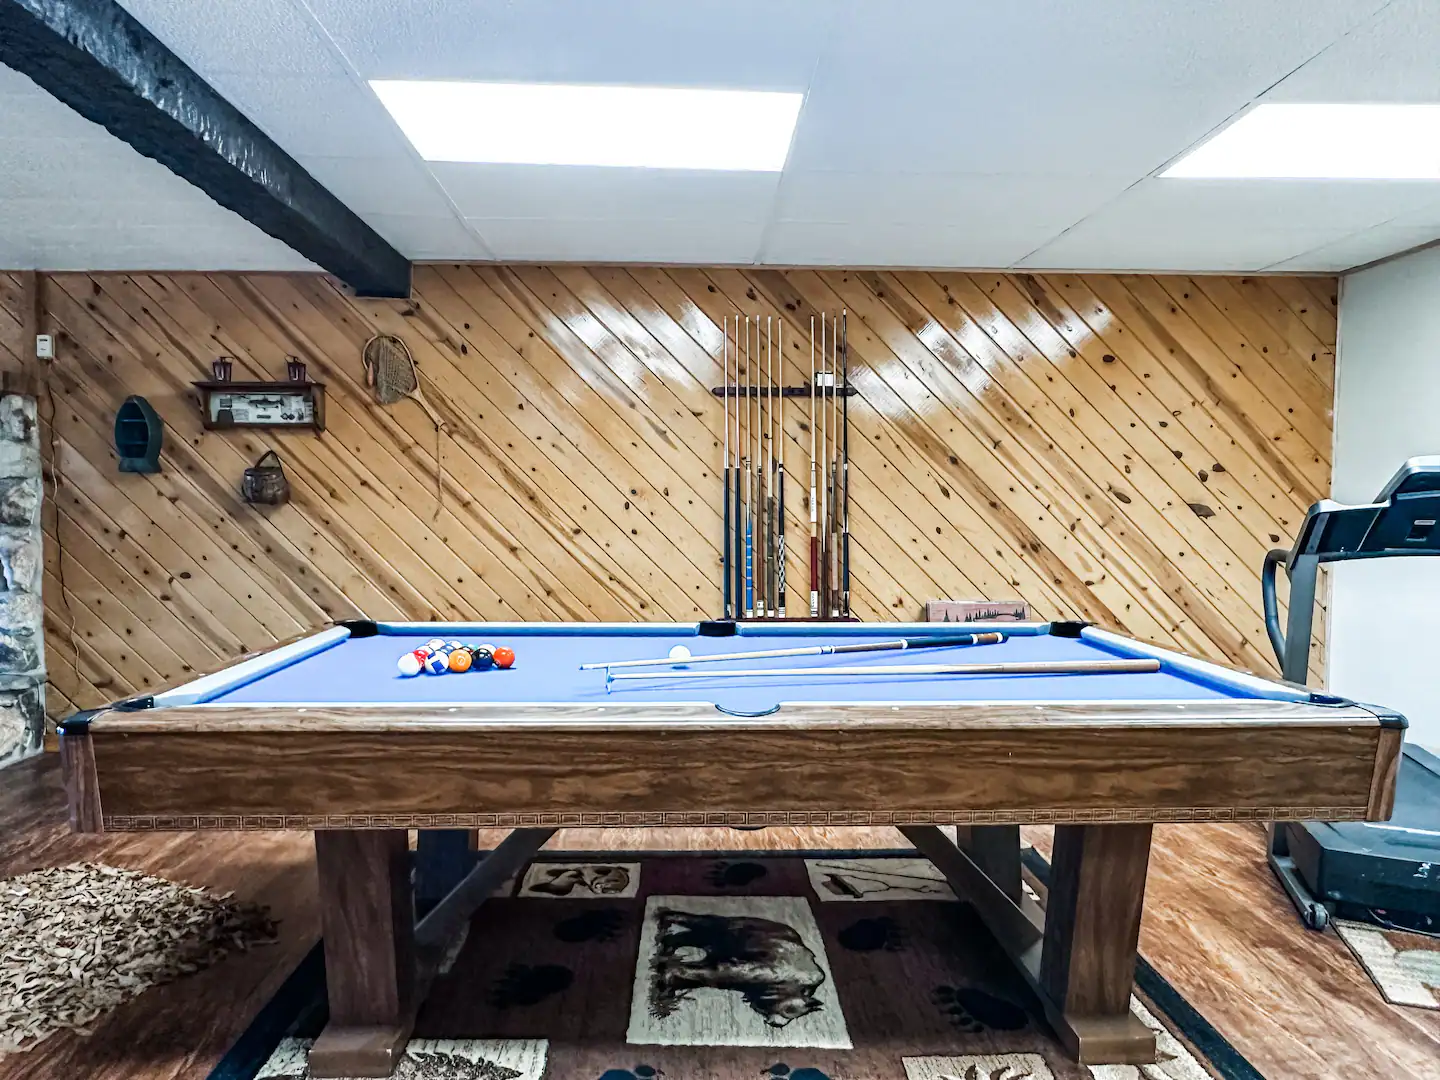 billiards room in a cabin basement